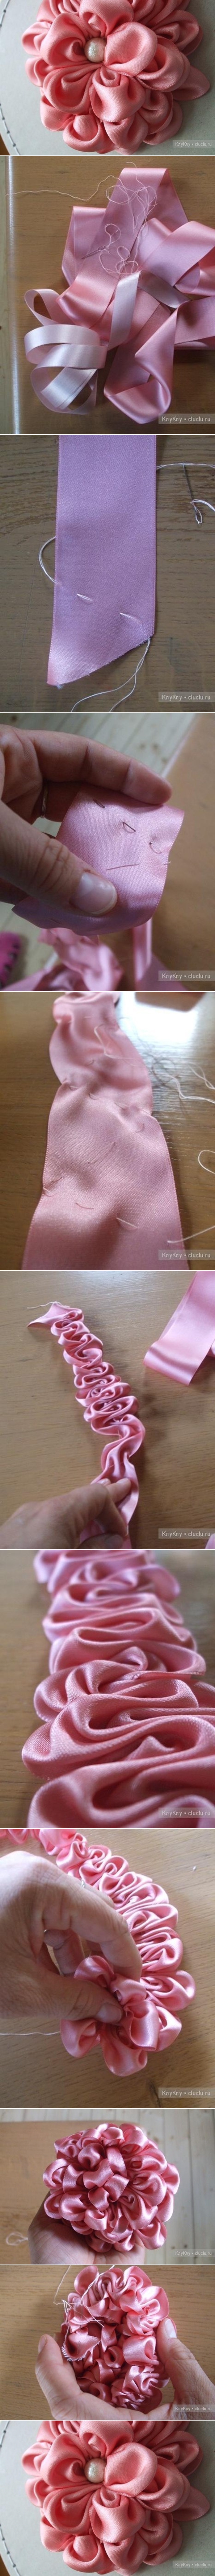 ruffled ribbon flower tutorial